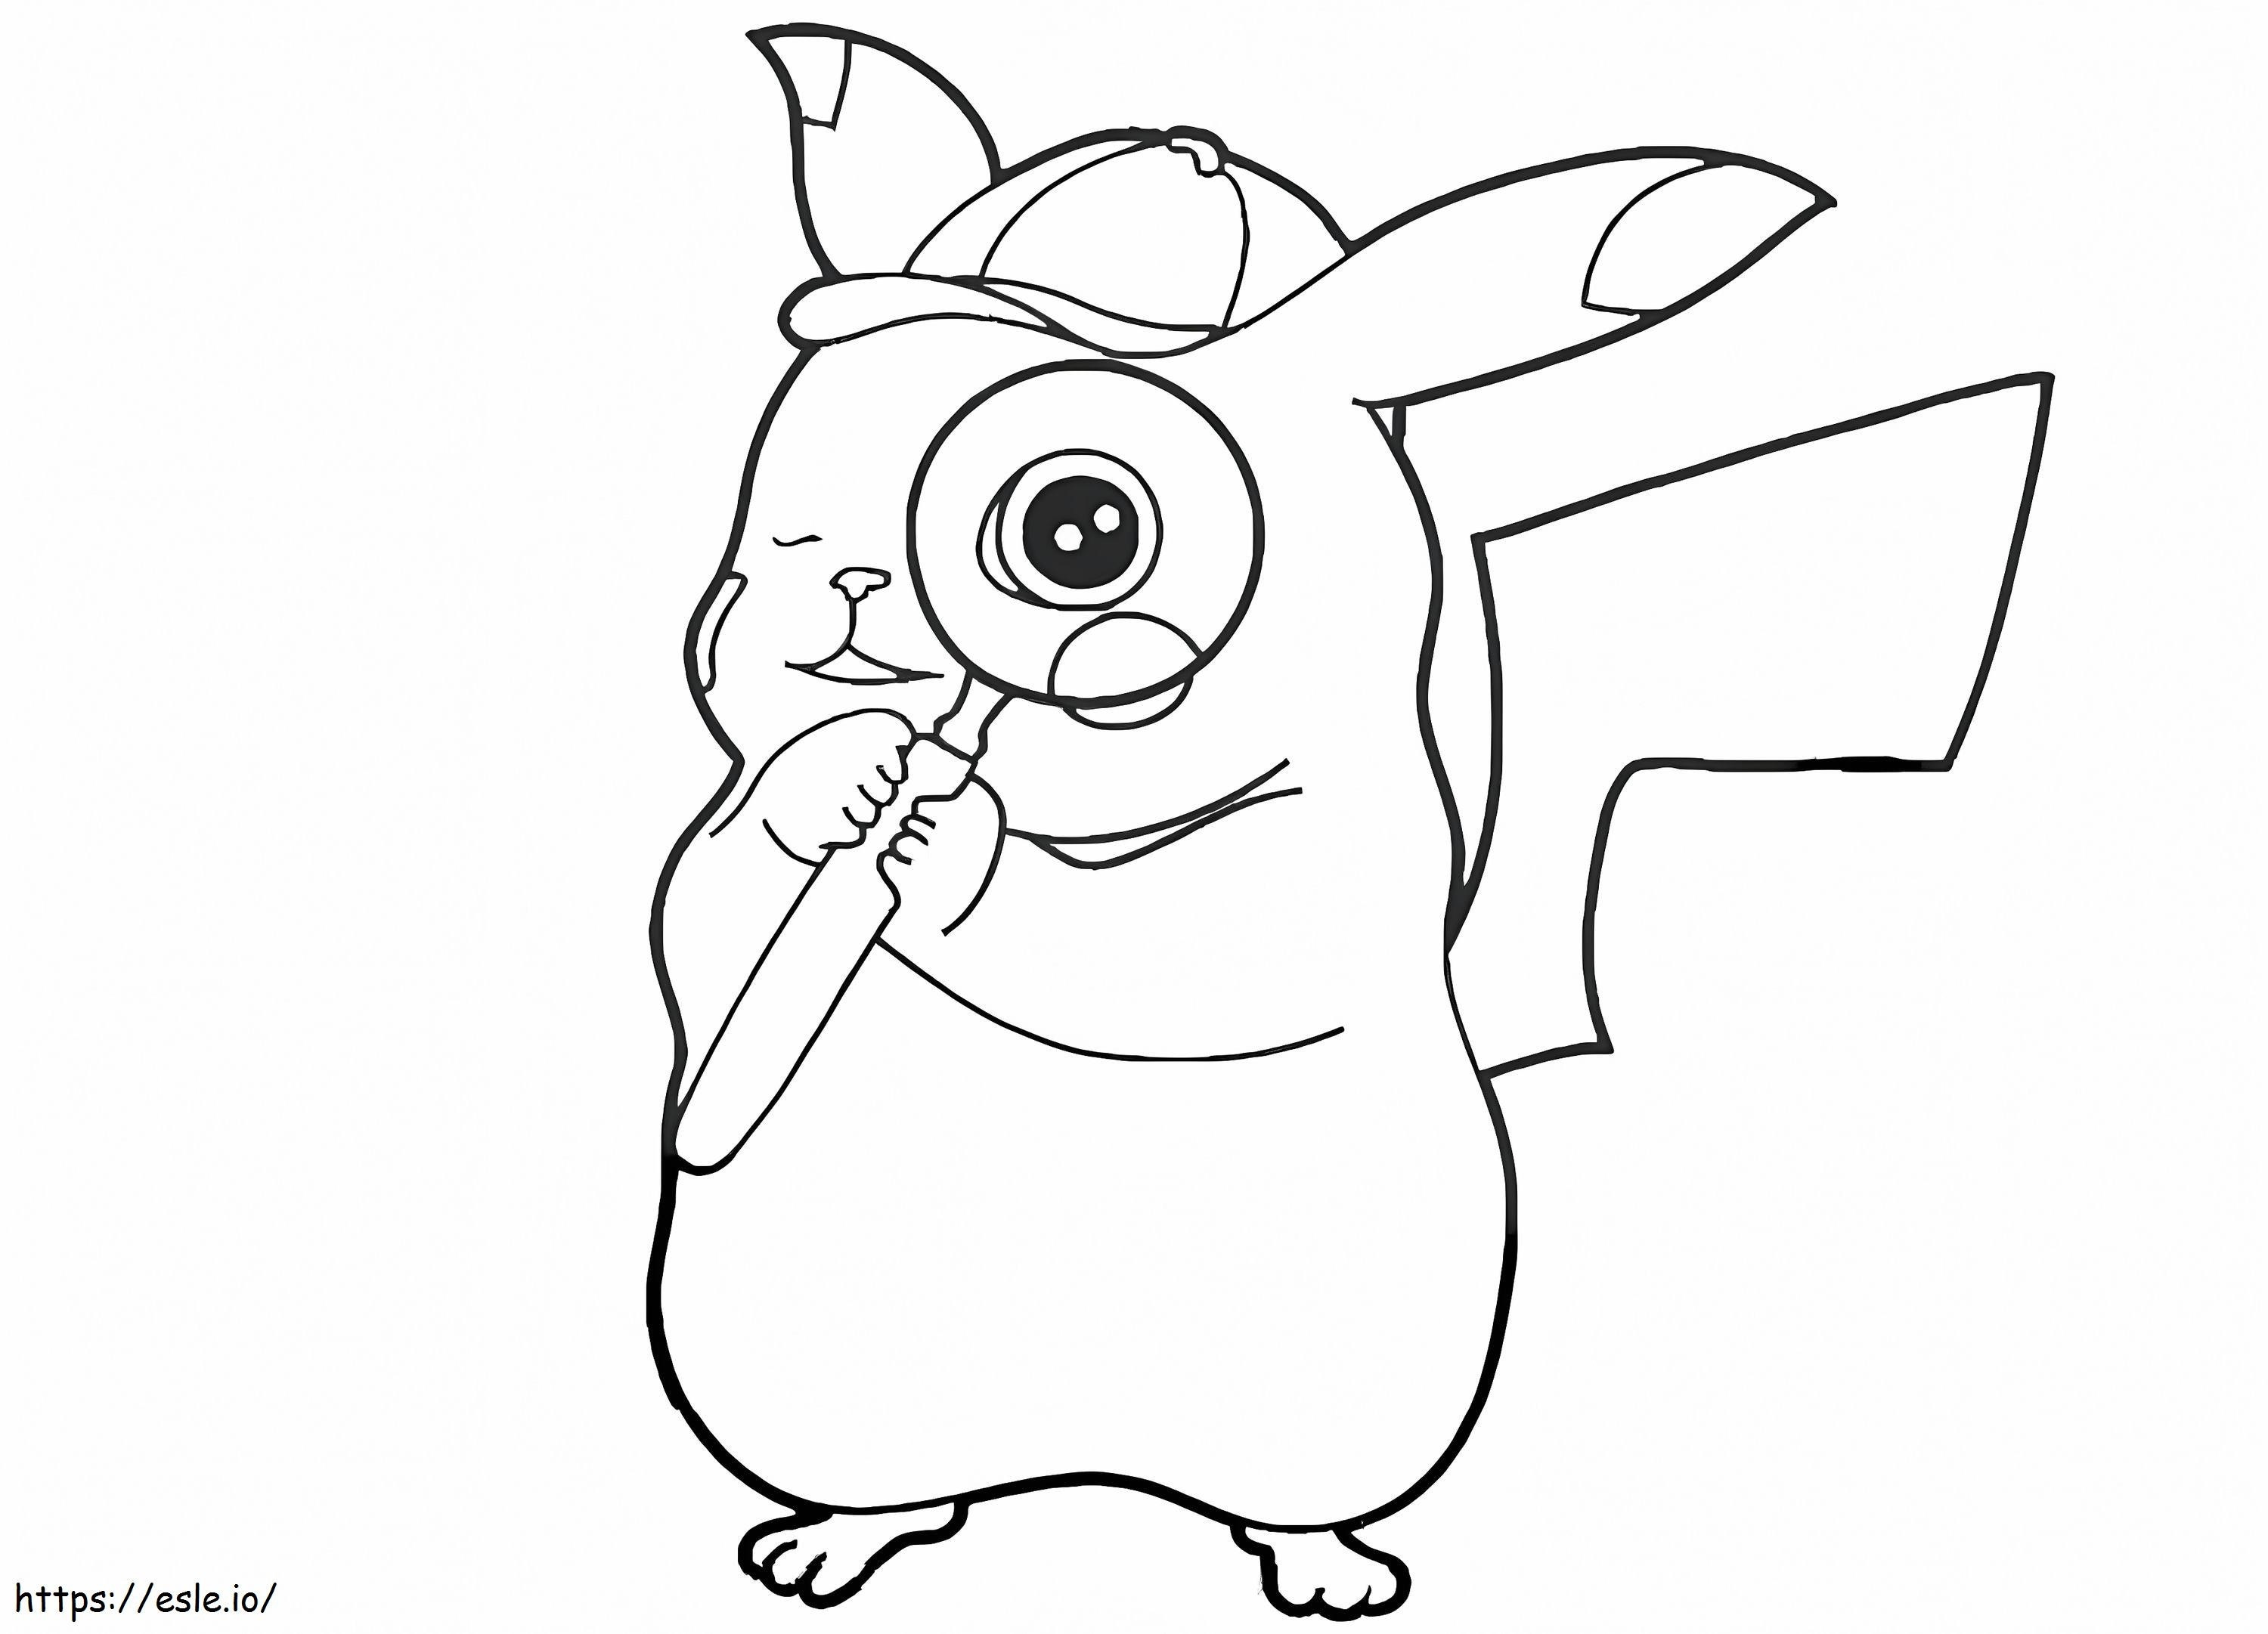 Lindo Detective Pikachu coloring page